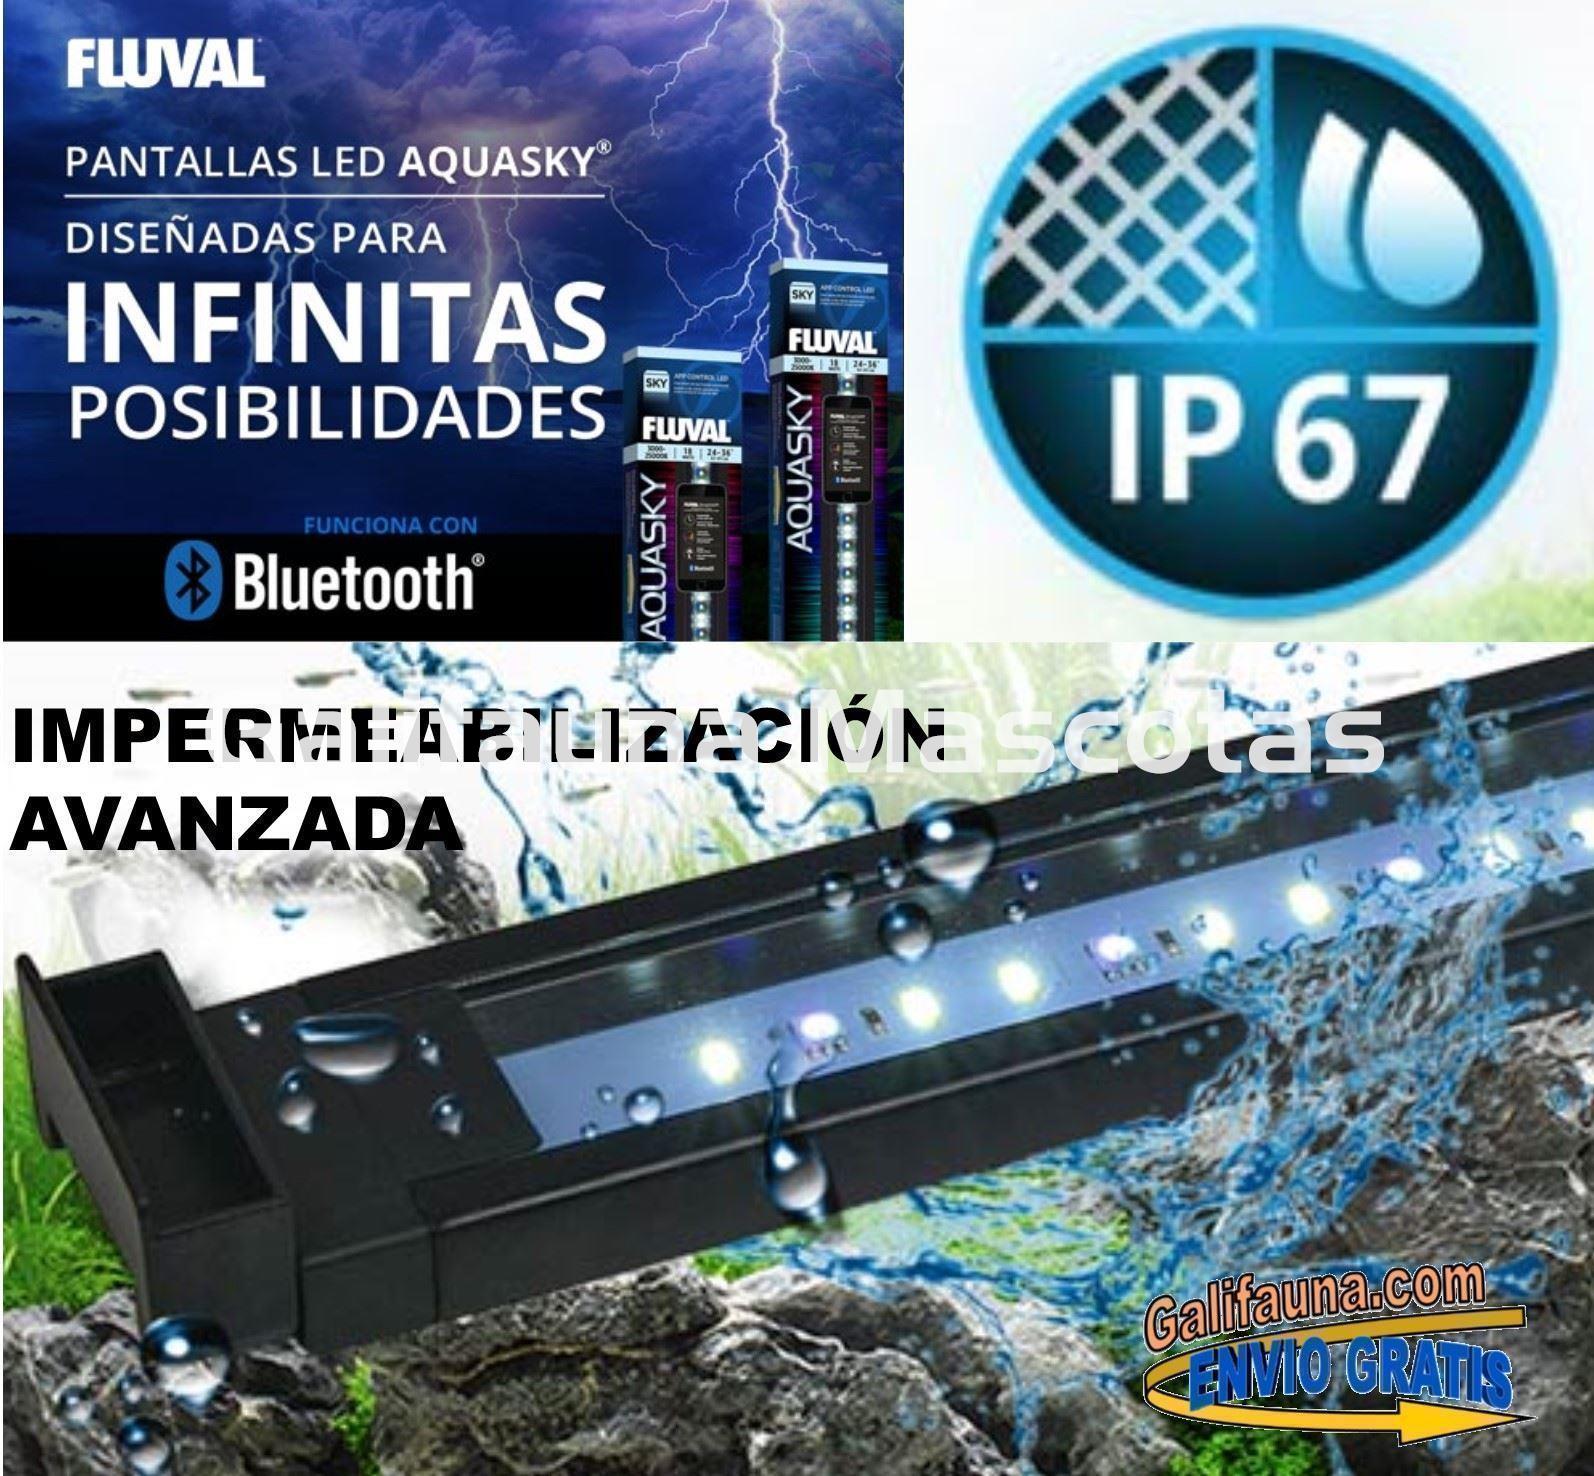 PANTALLA LED BLUETOOTH FLUVAL AQUASKY LED. Conexión APP Fluval y Brazos extensibles. - Imagen 2